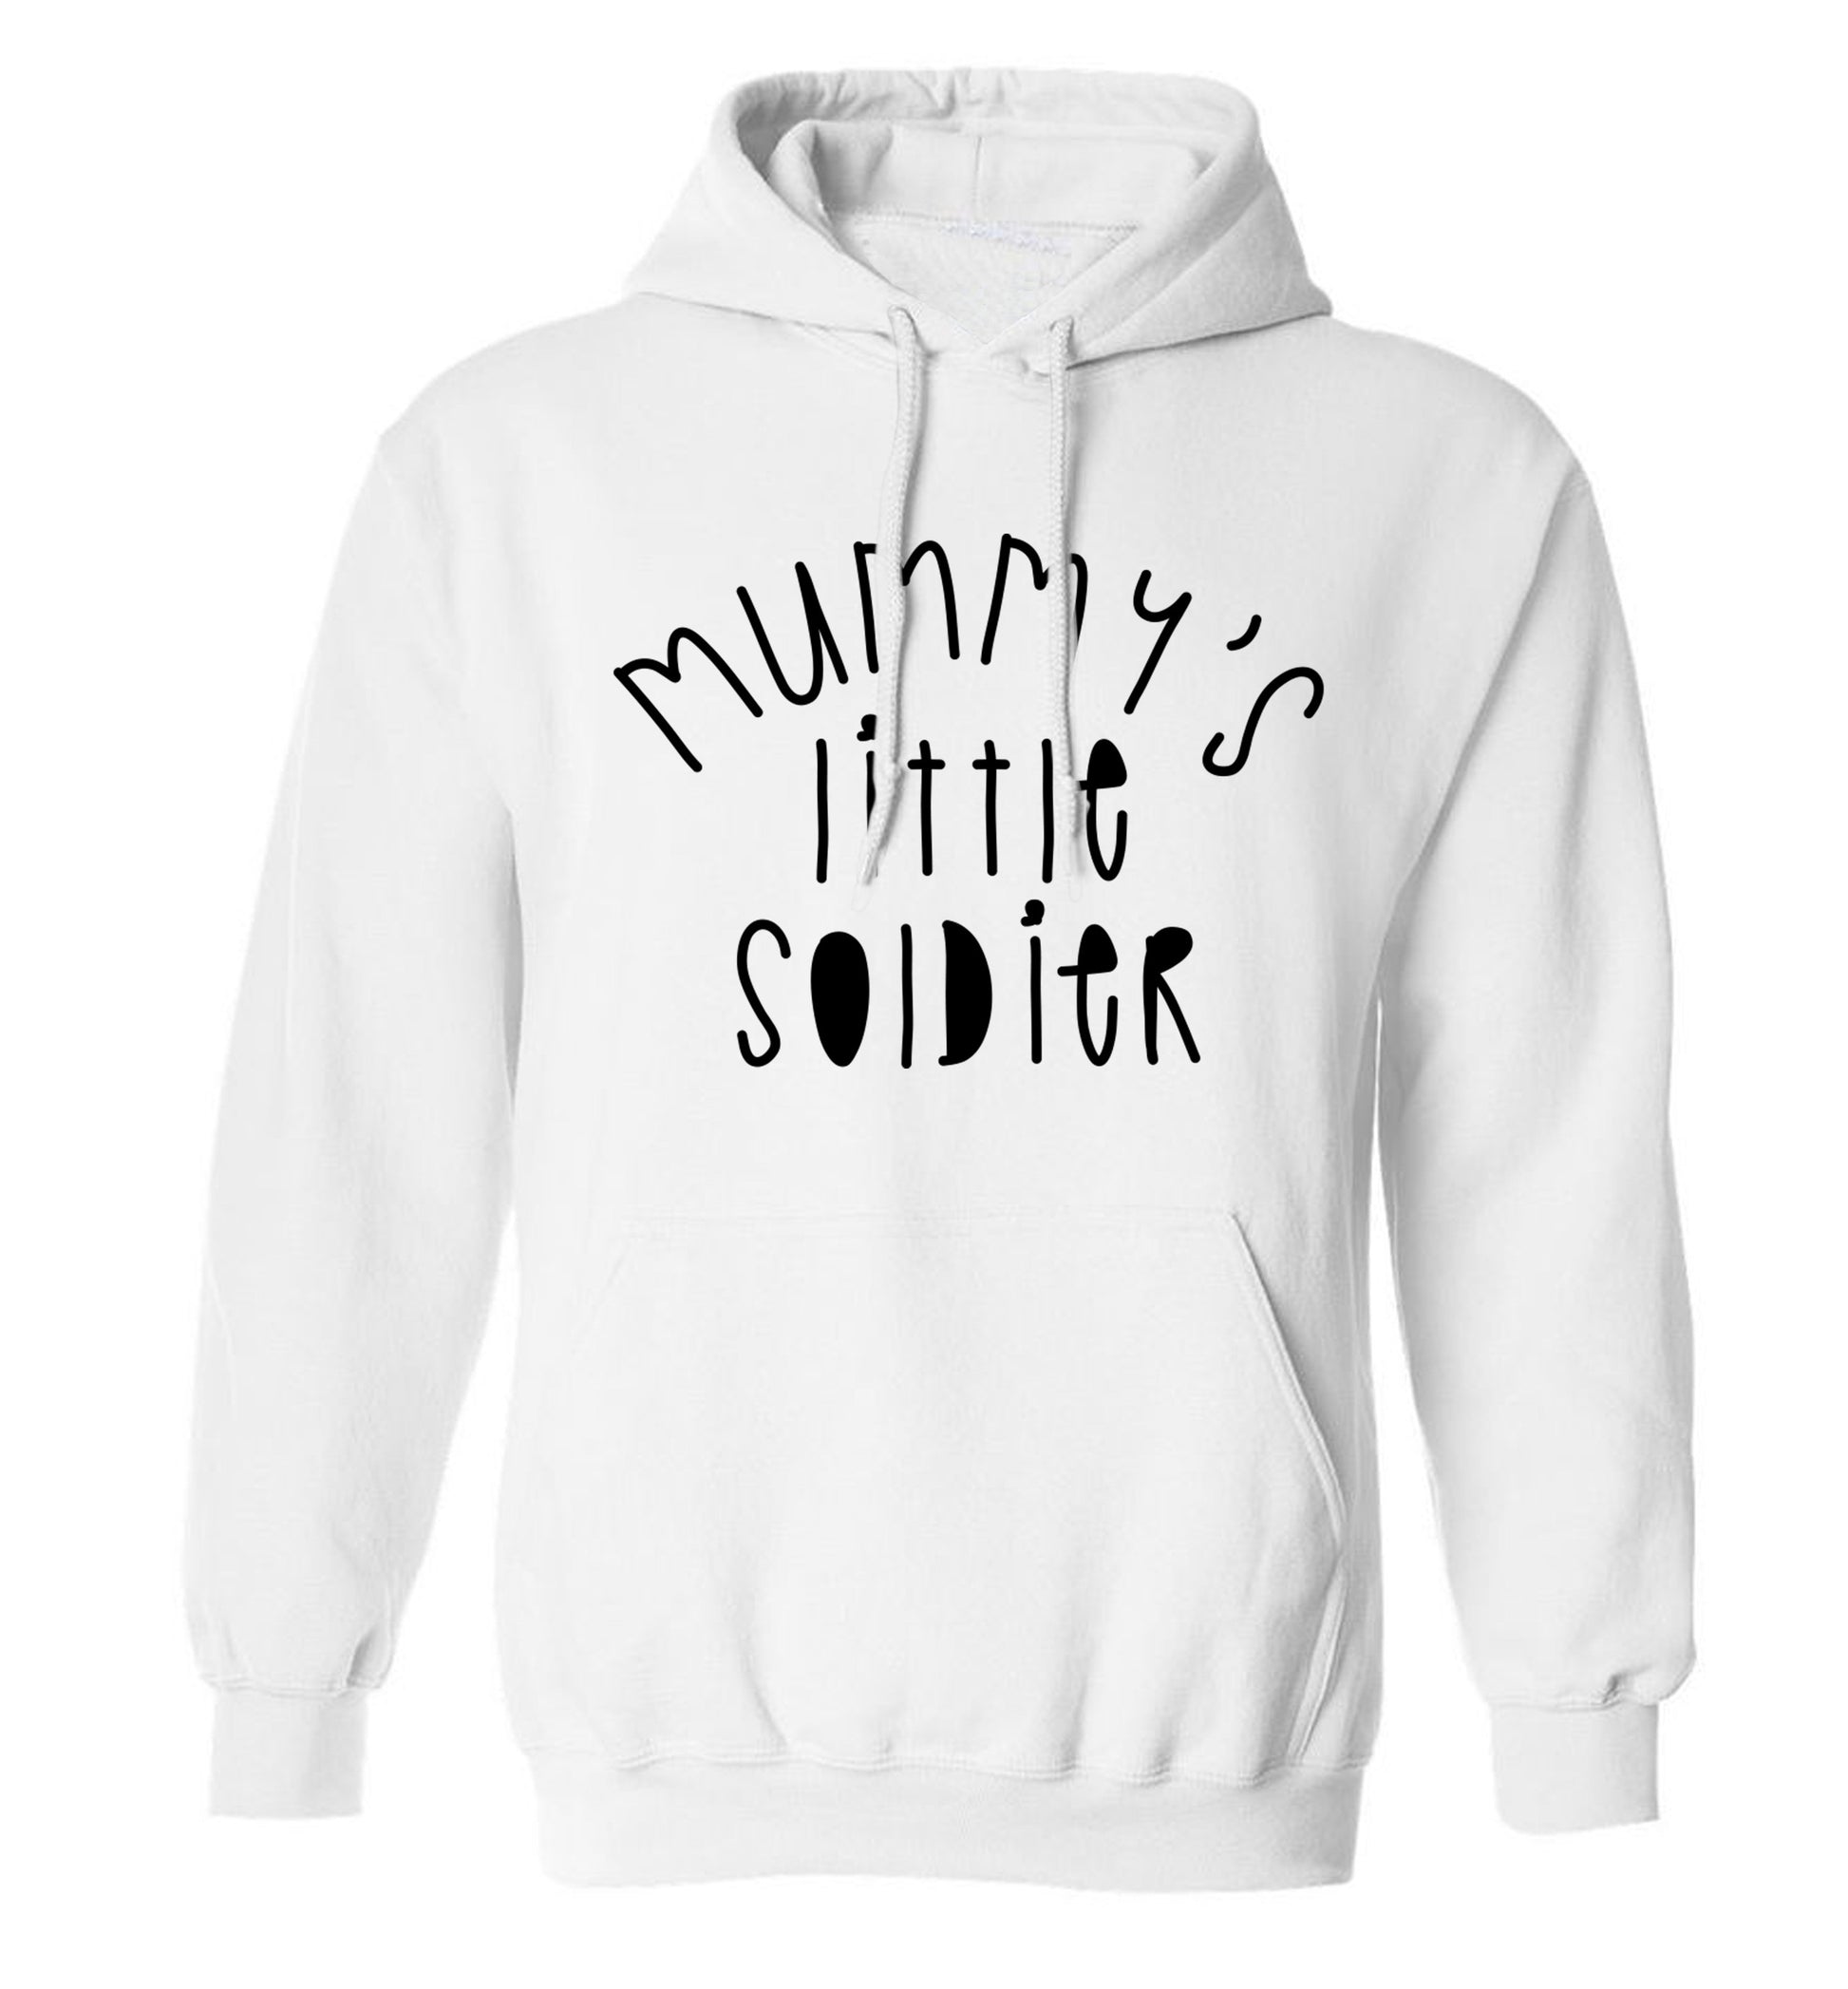 Mummy's little soldier adults unisex white hoodie 2XL